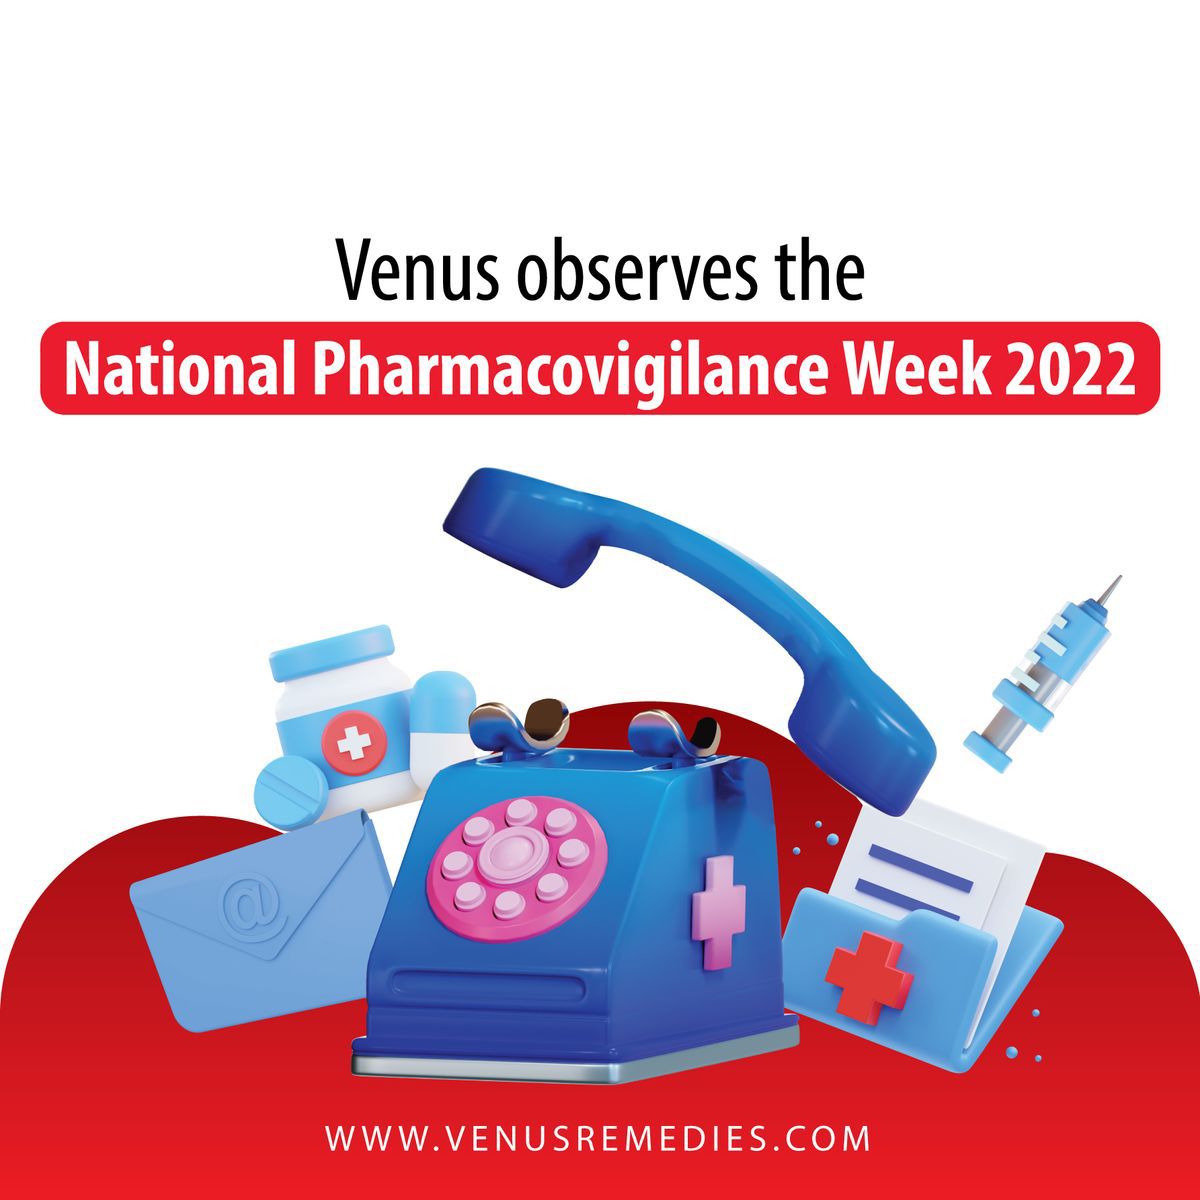 Venus observes the National Pharmacovigilance Week 2022